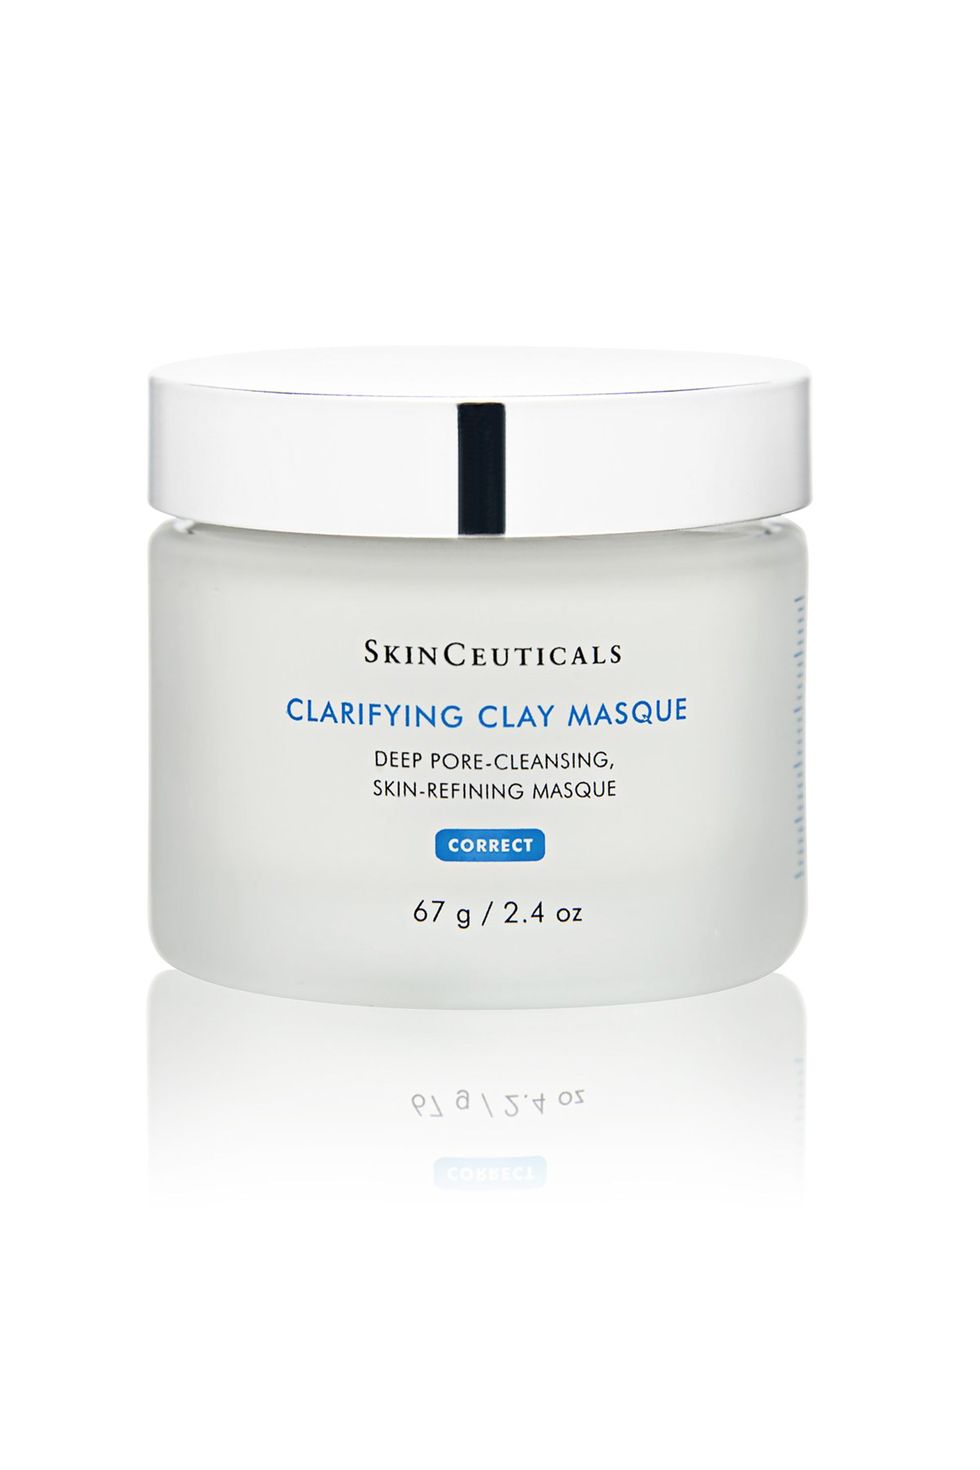 Clarifying Clay Masque Deep Pore-cleansing Skin-refining Masque